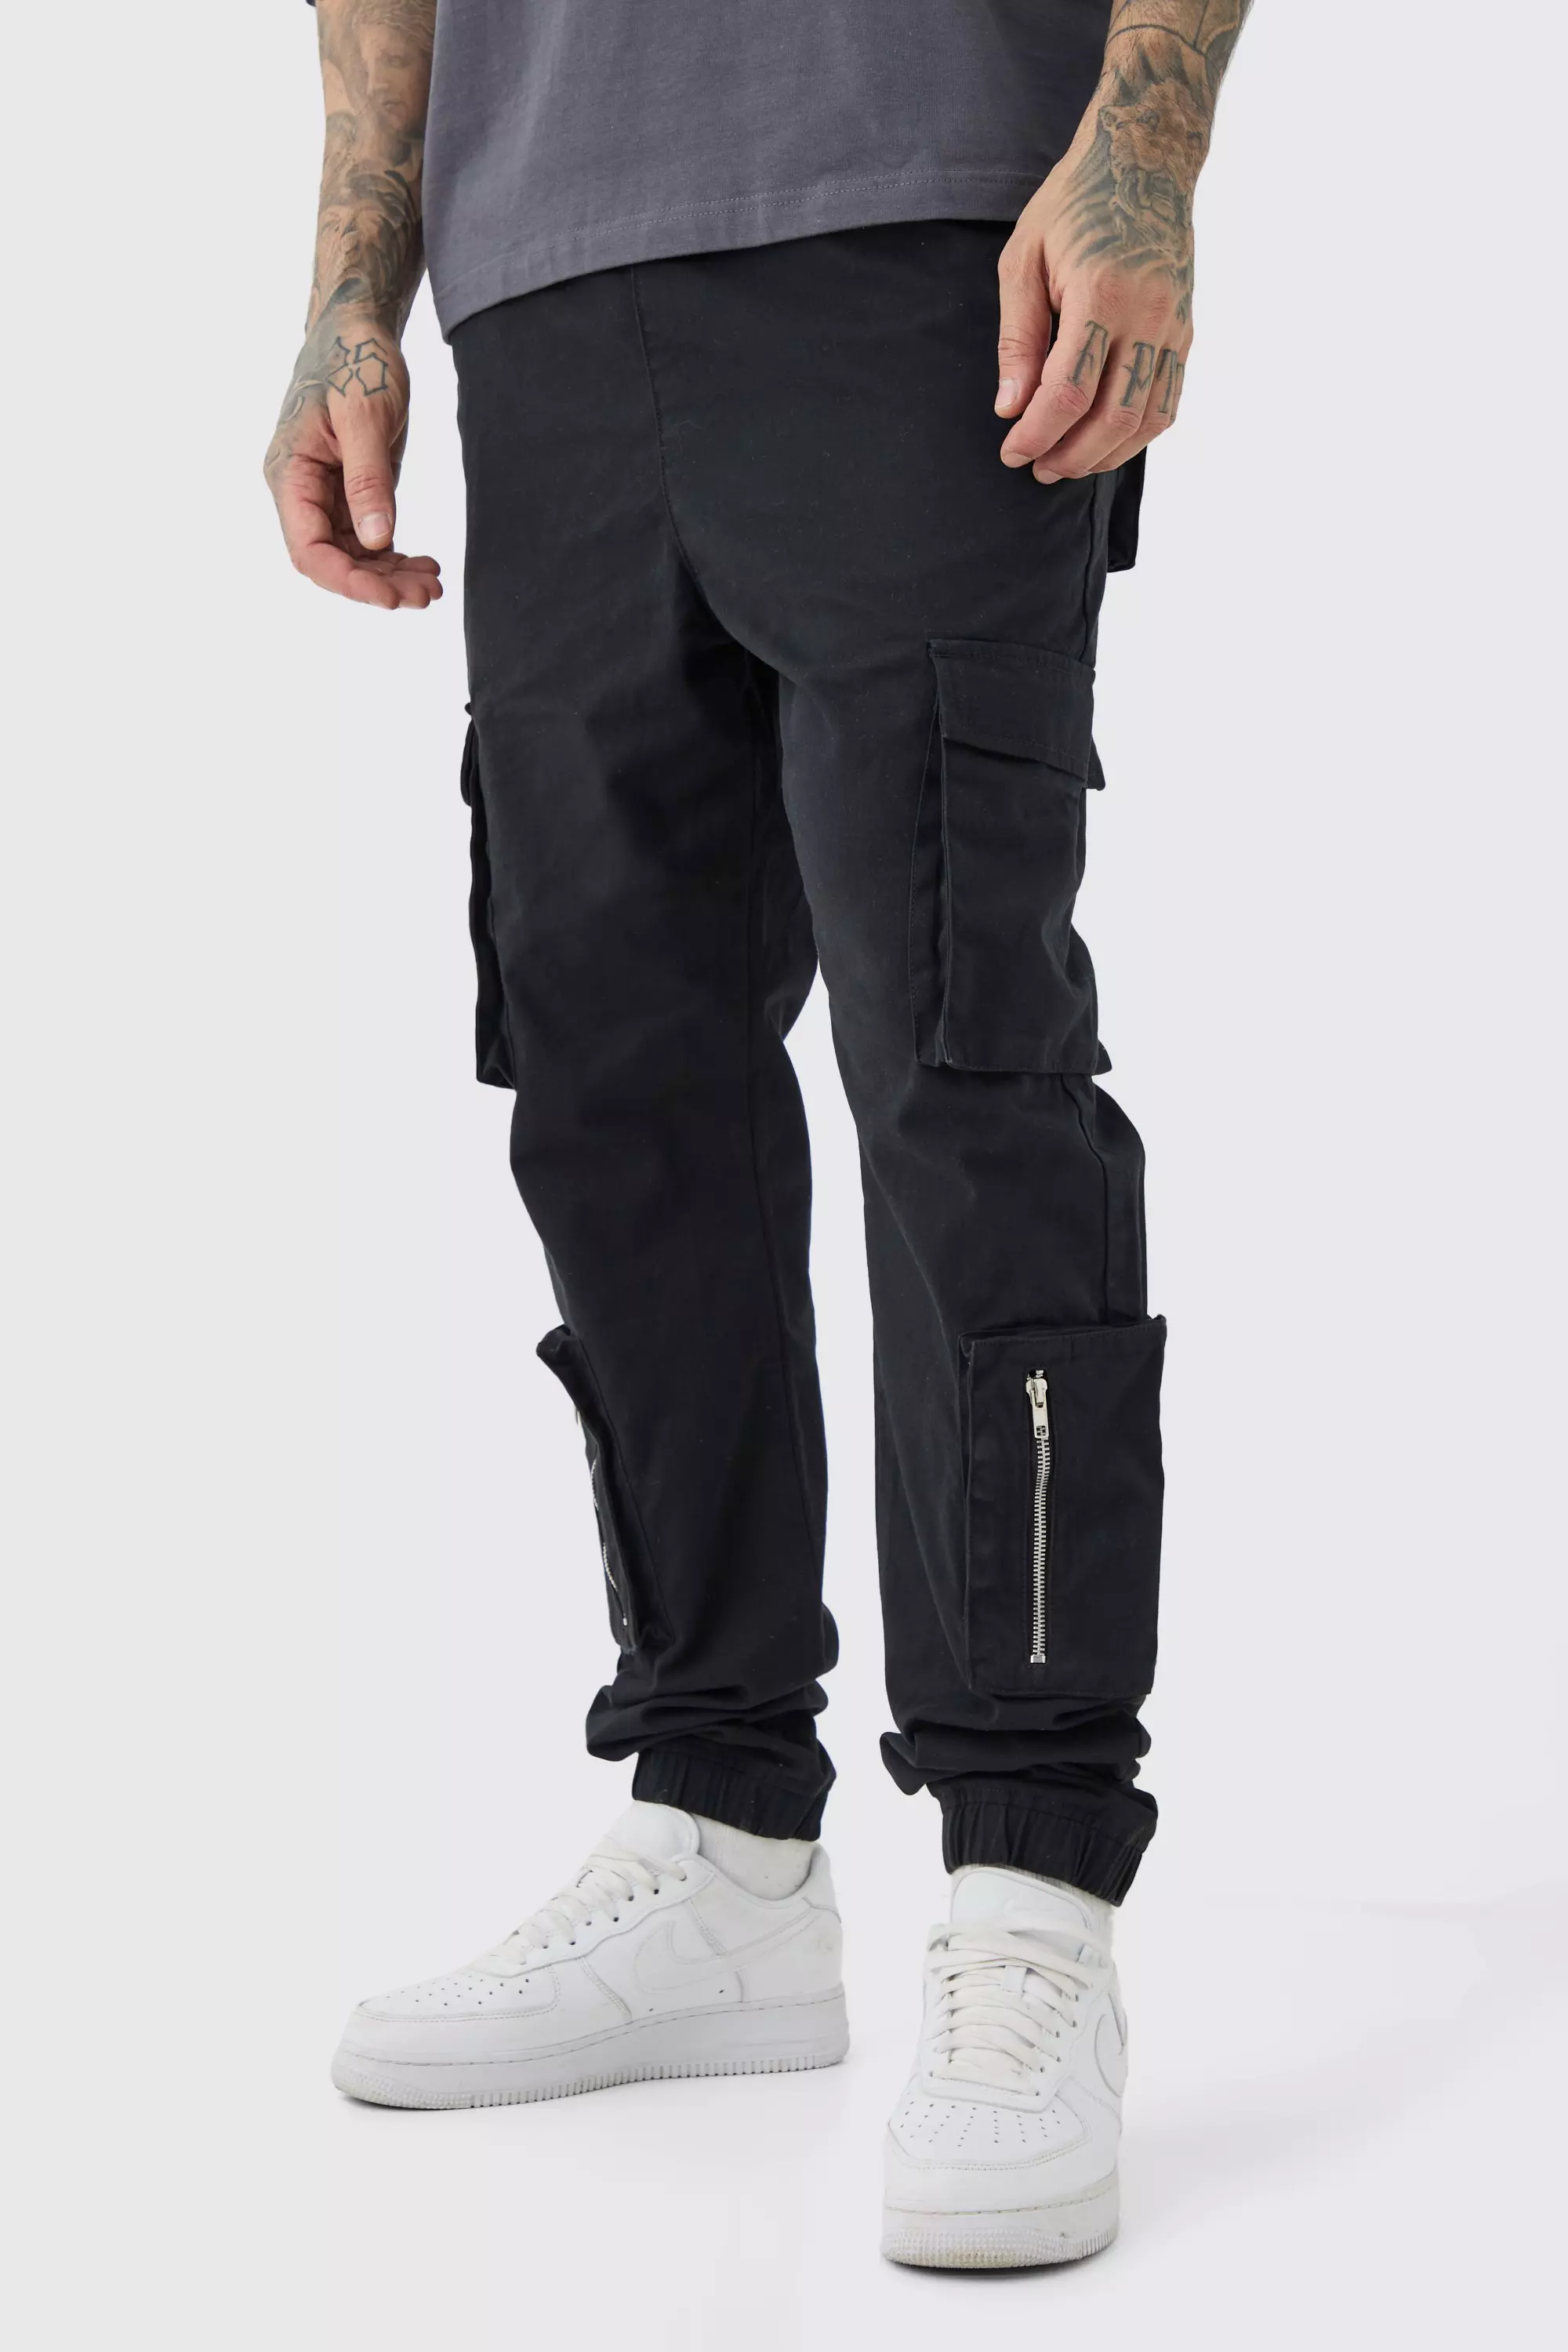 Men's Black Cargo Pants: Browse 122 Brands